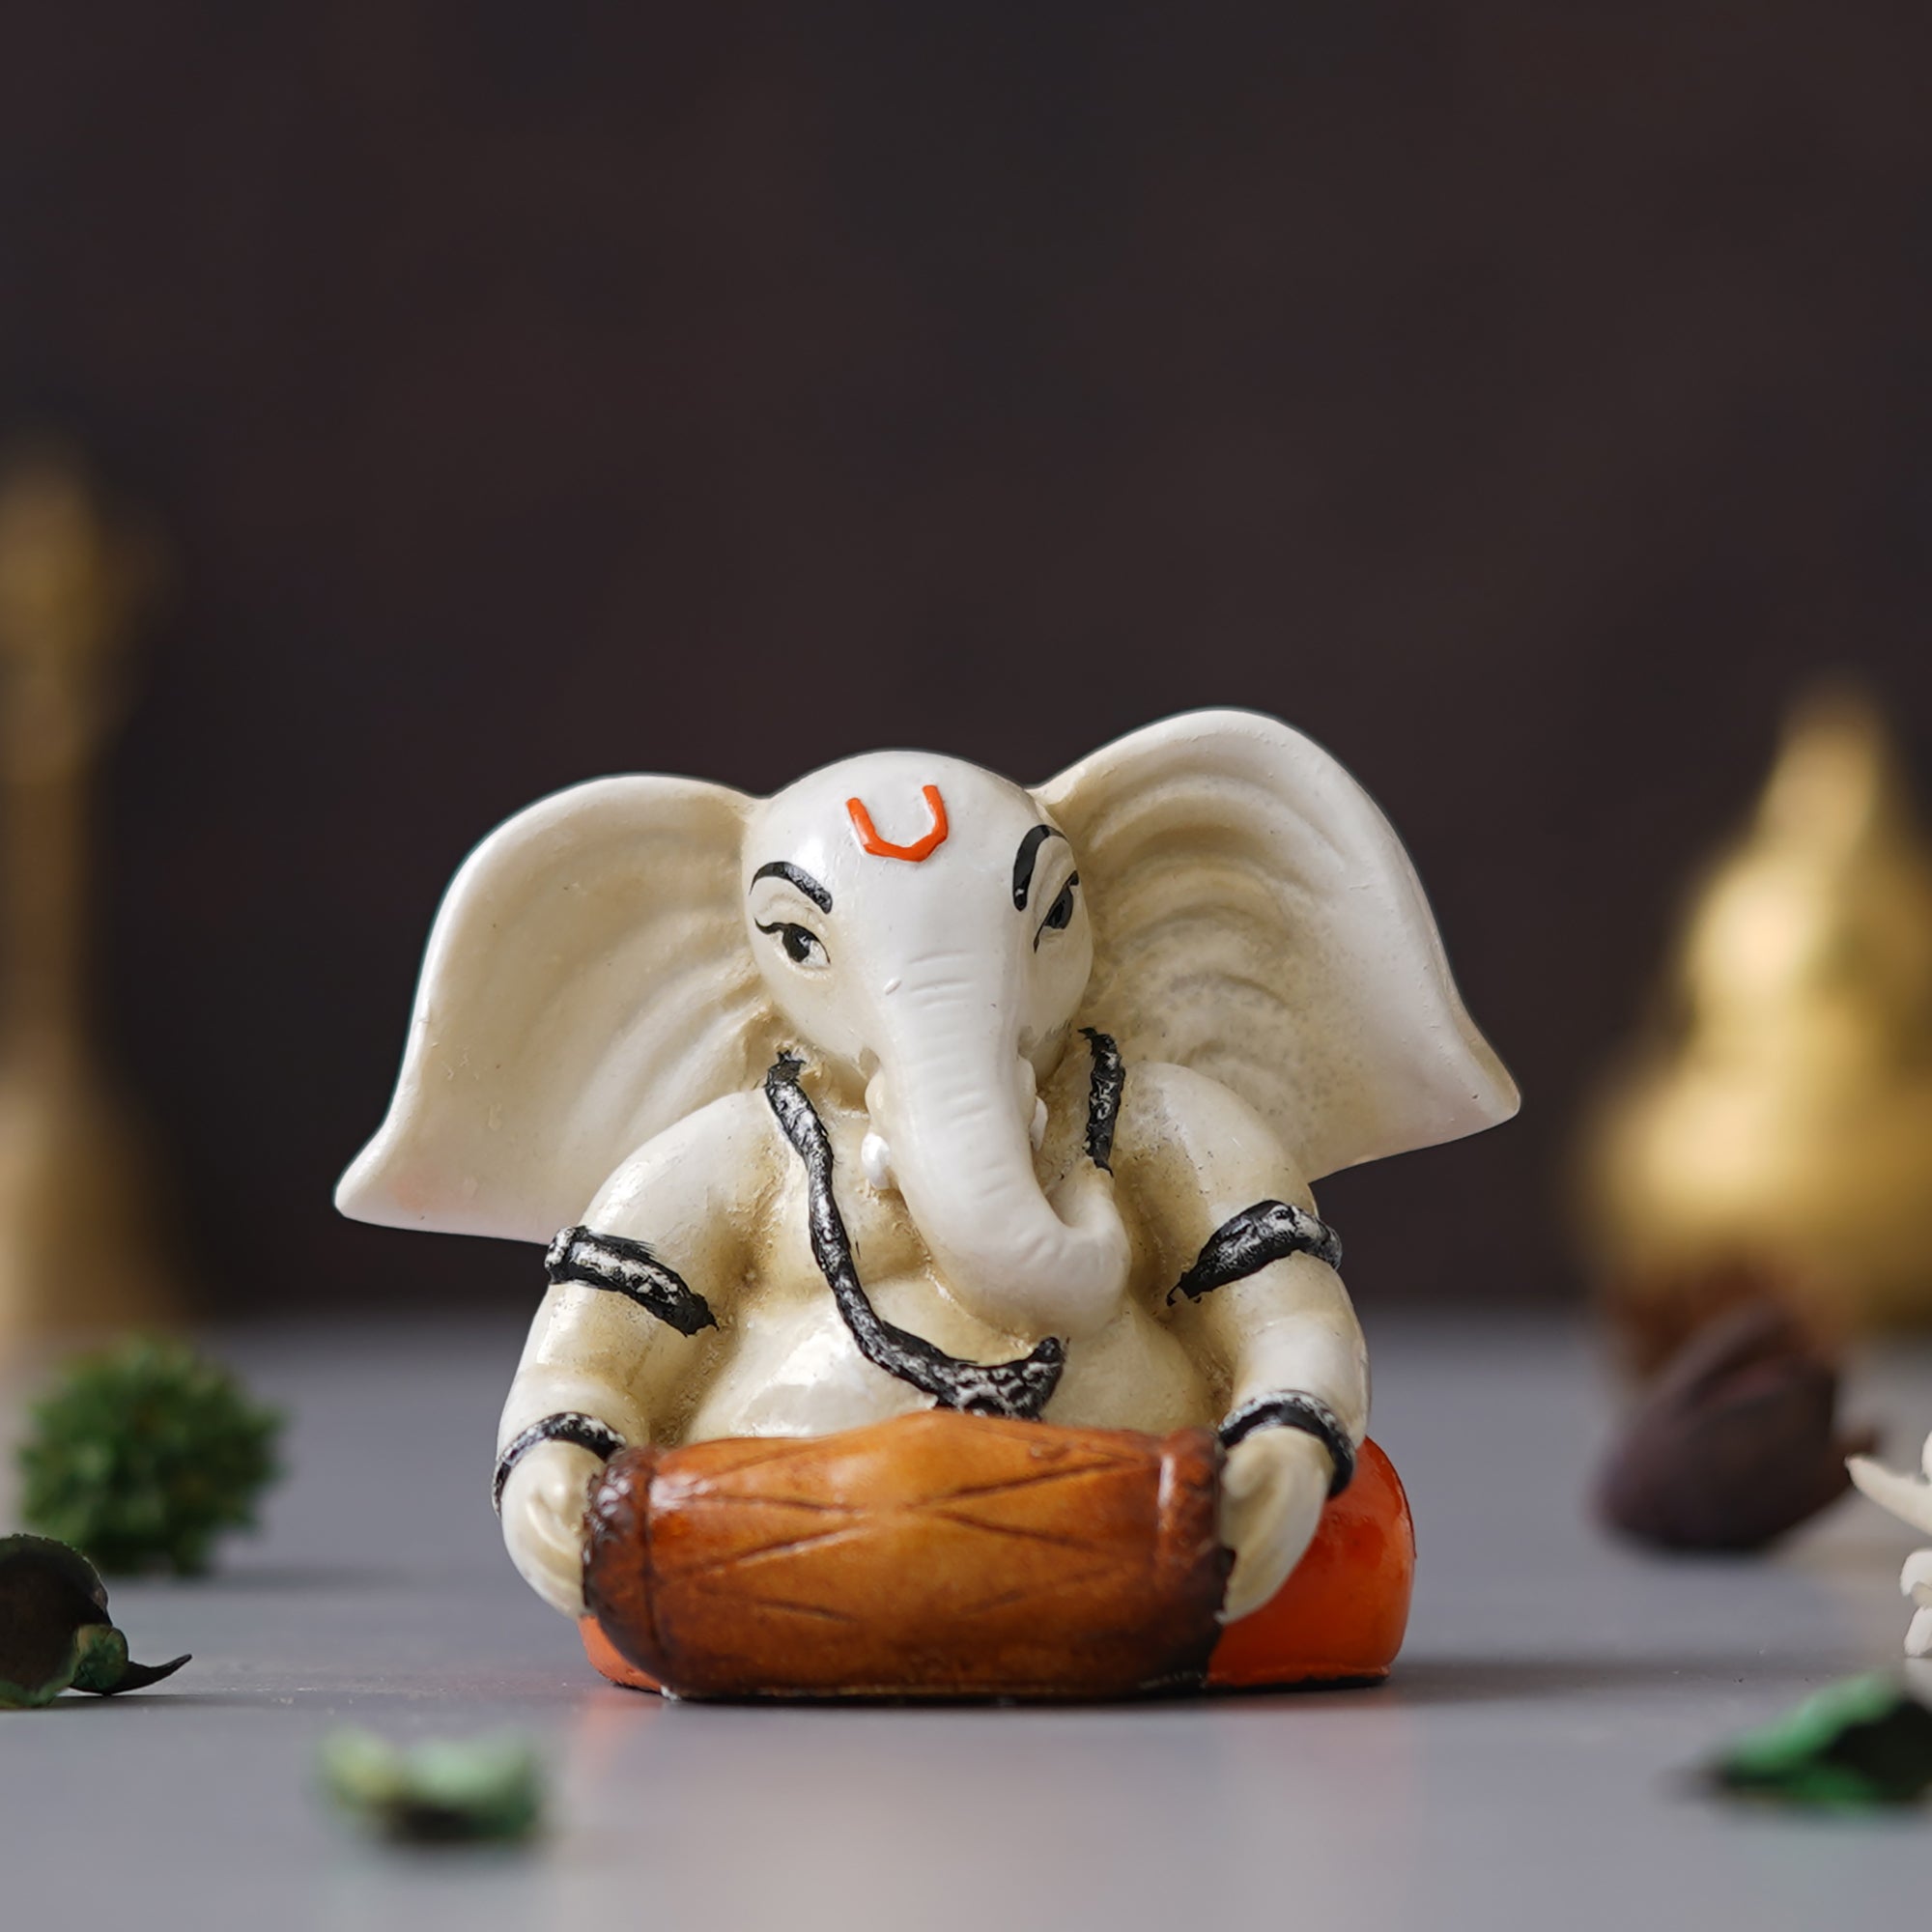 eCraftIndia White & Orange Polyresin Handcrafted Lord Ganesha Idol Playing Tabla Musical Instrument 4